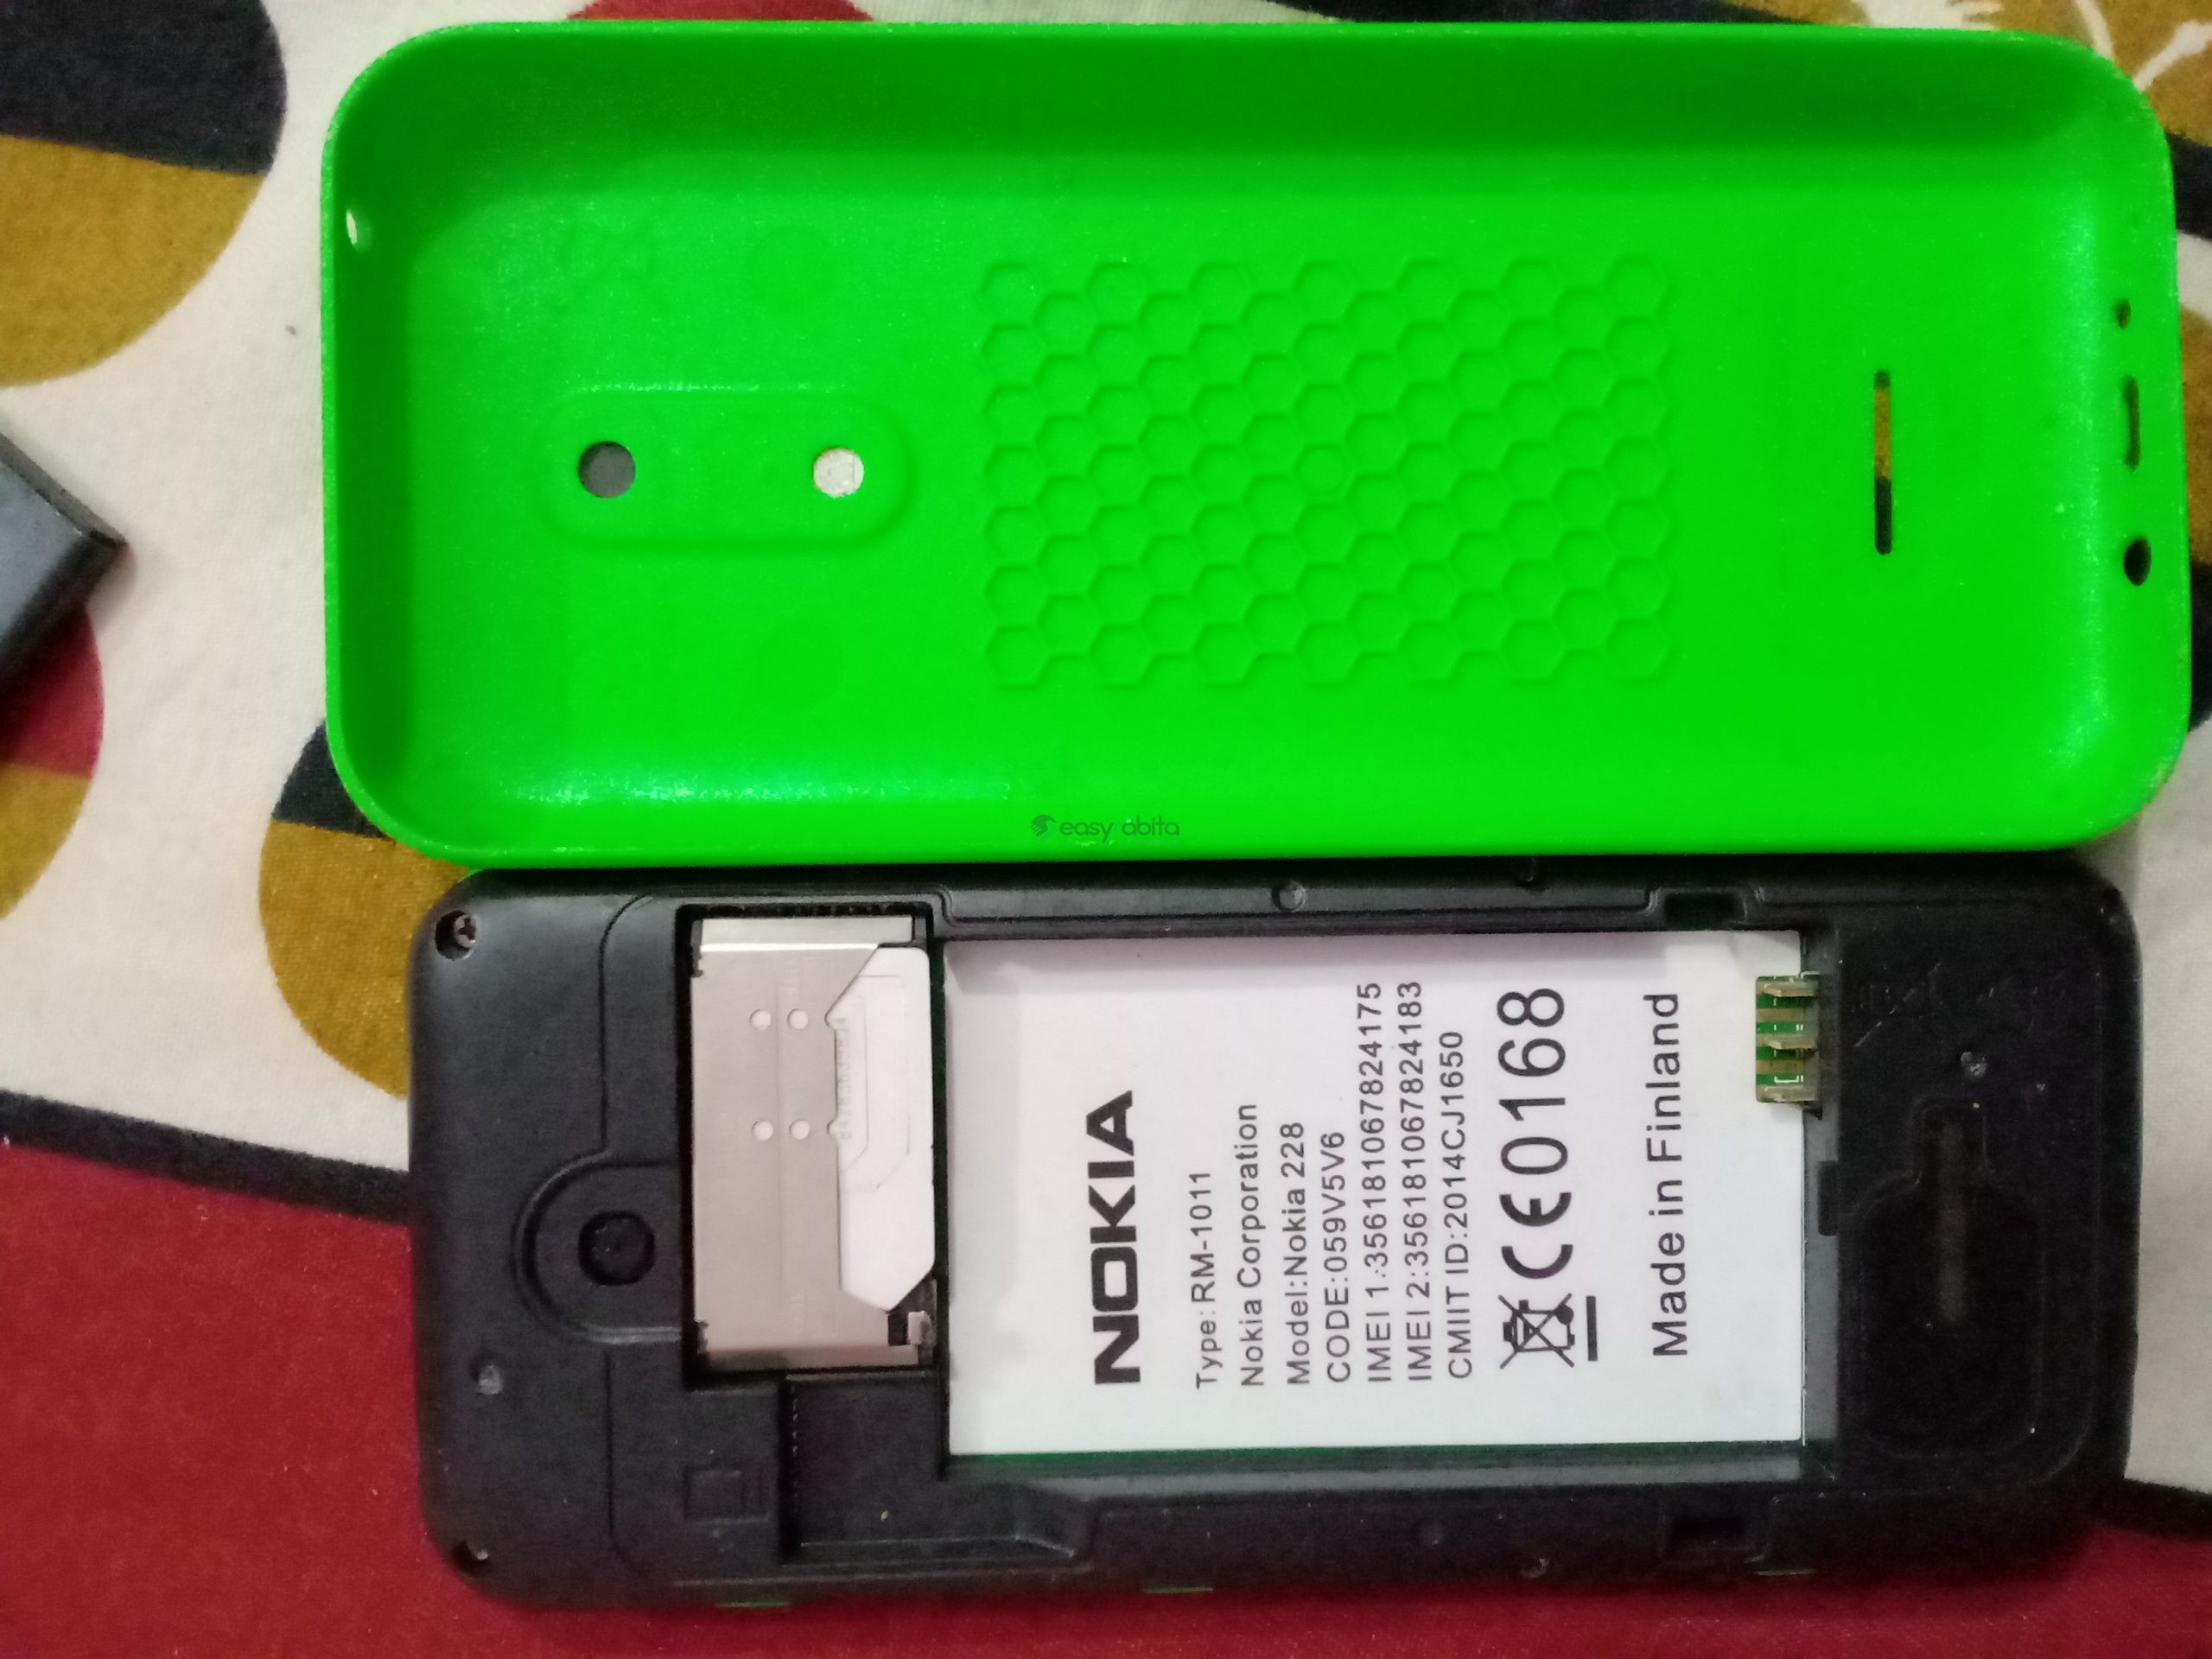 Nokia Model 228 China Brand